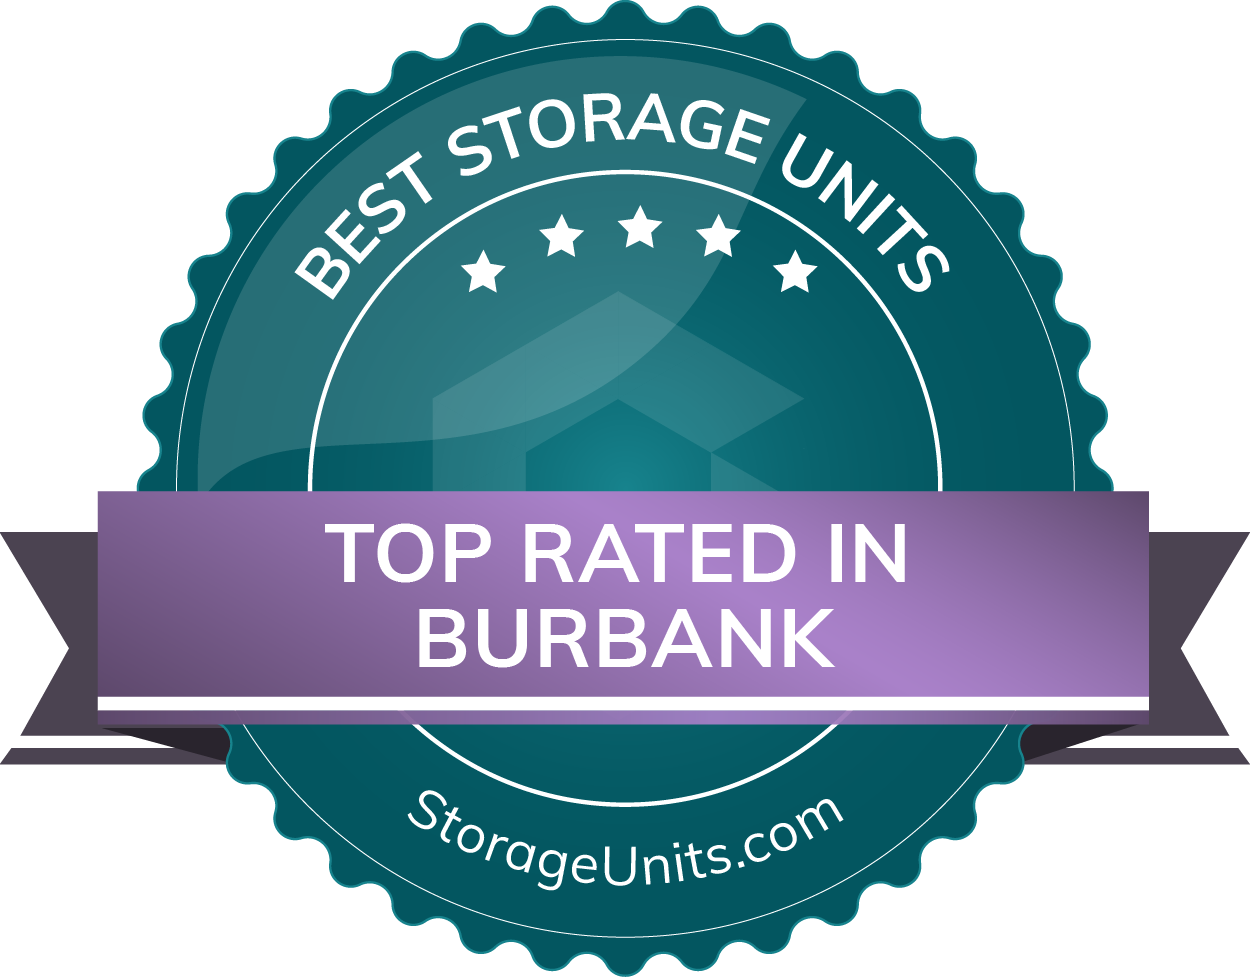 Best Self Storage Units in Burbank, California of 2022